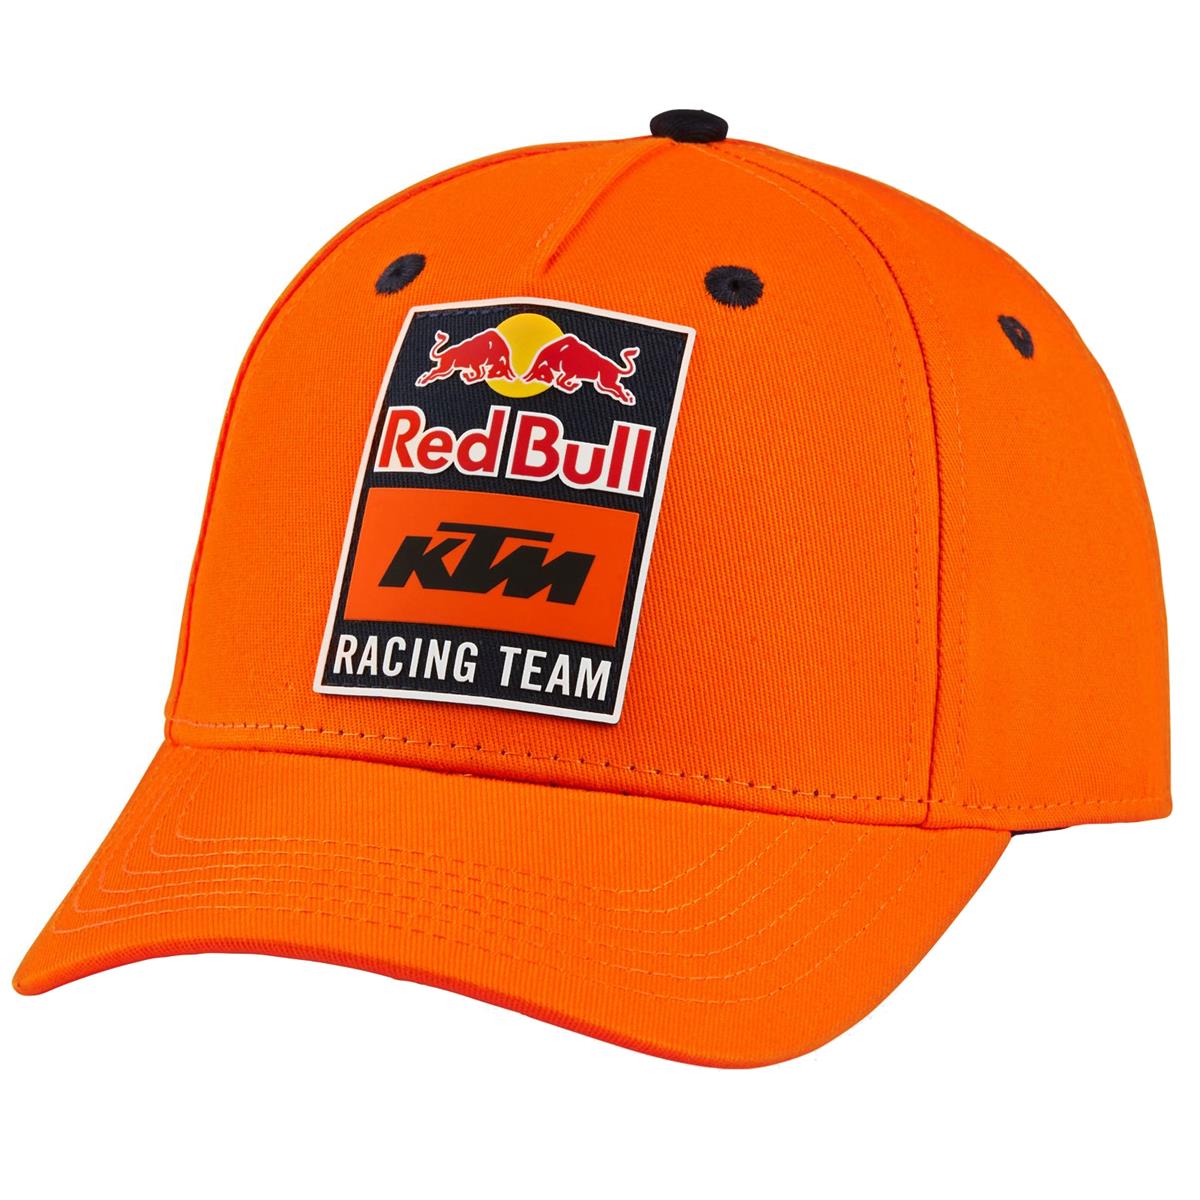 Where Da Bulls At? Orange SnapBack Hat.